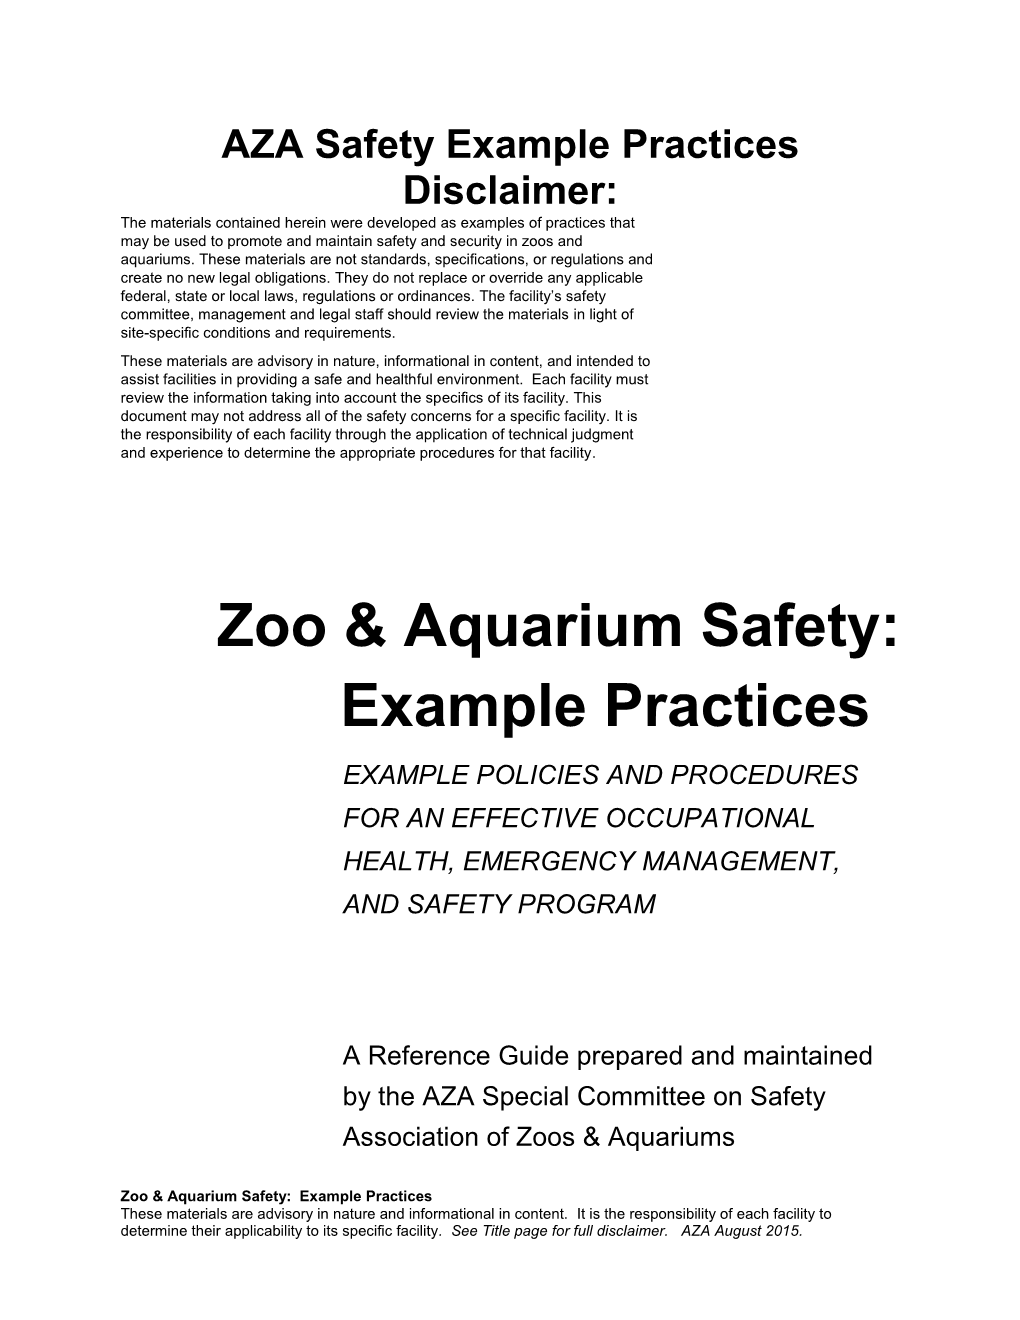 Zoo & Aquarium Safety: Example Practices